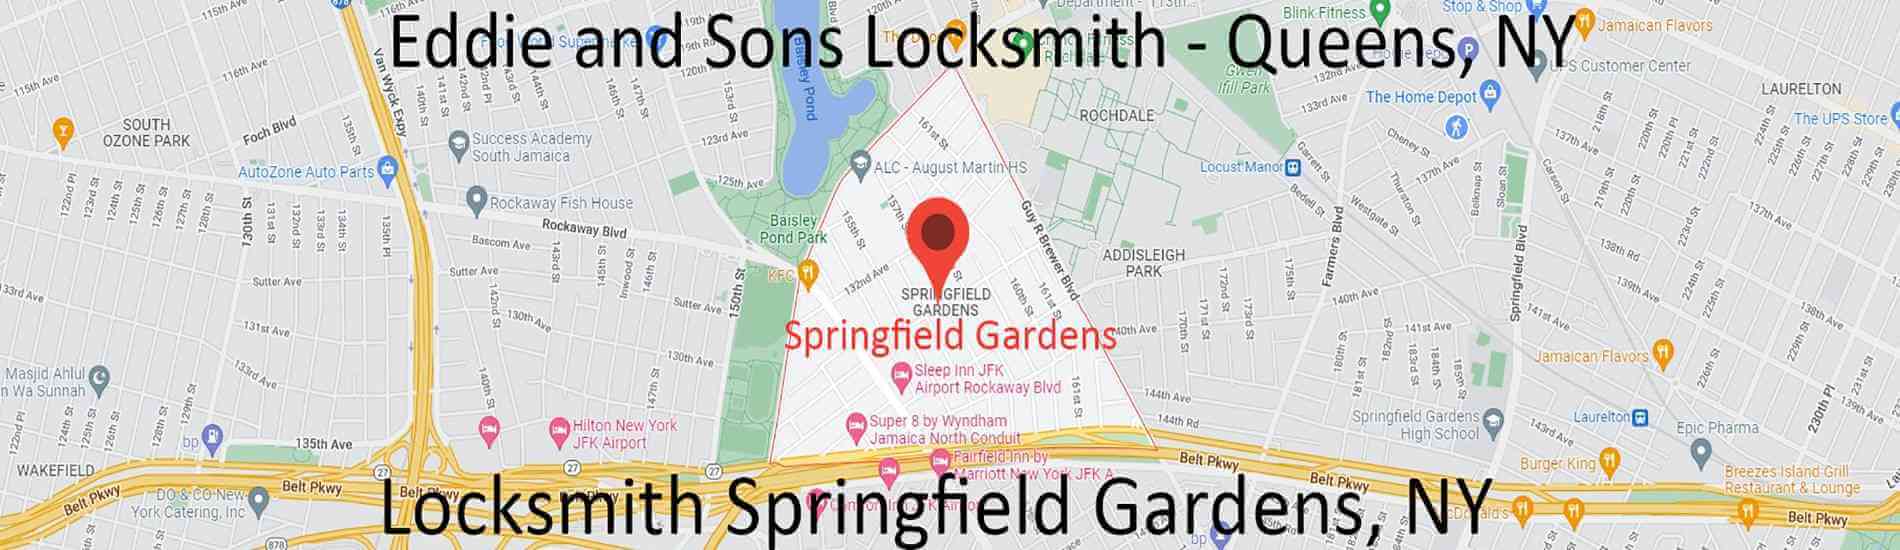 springfield-gardens-locksmith